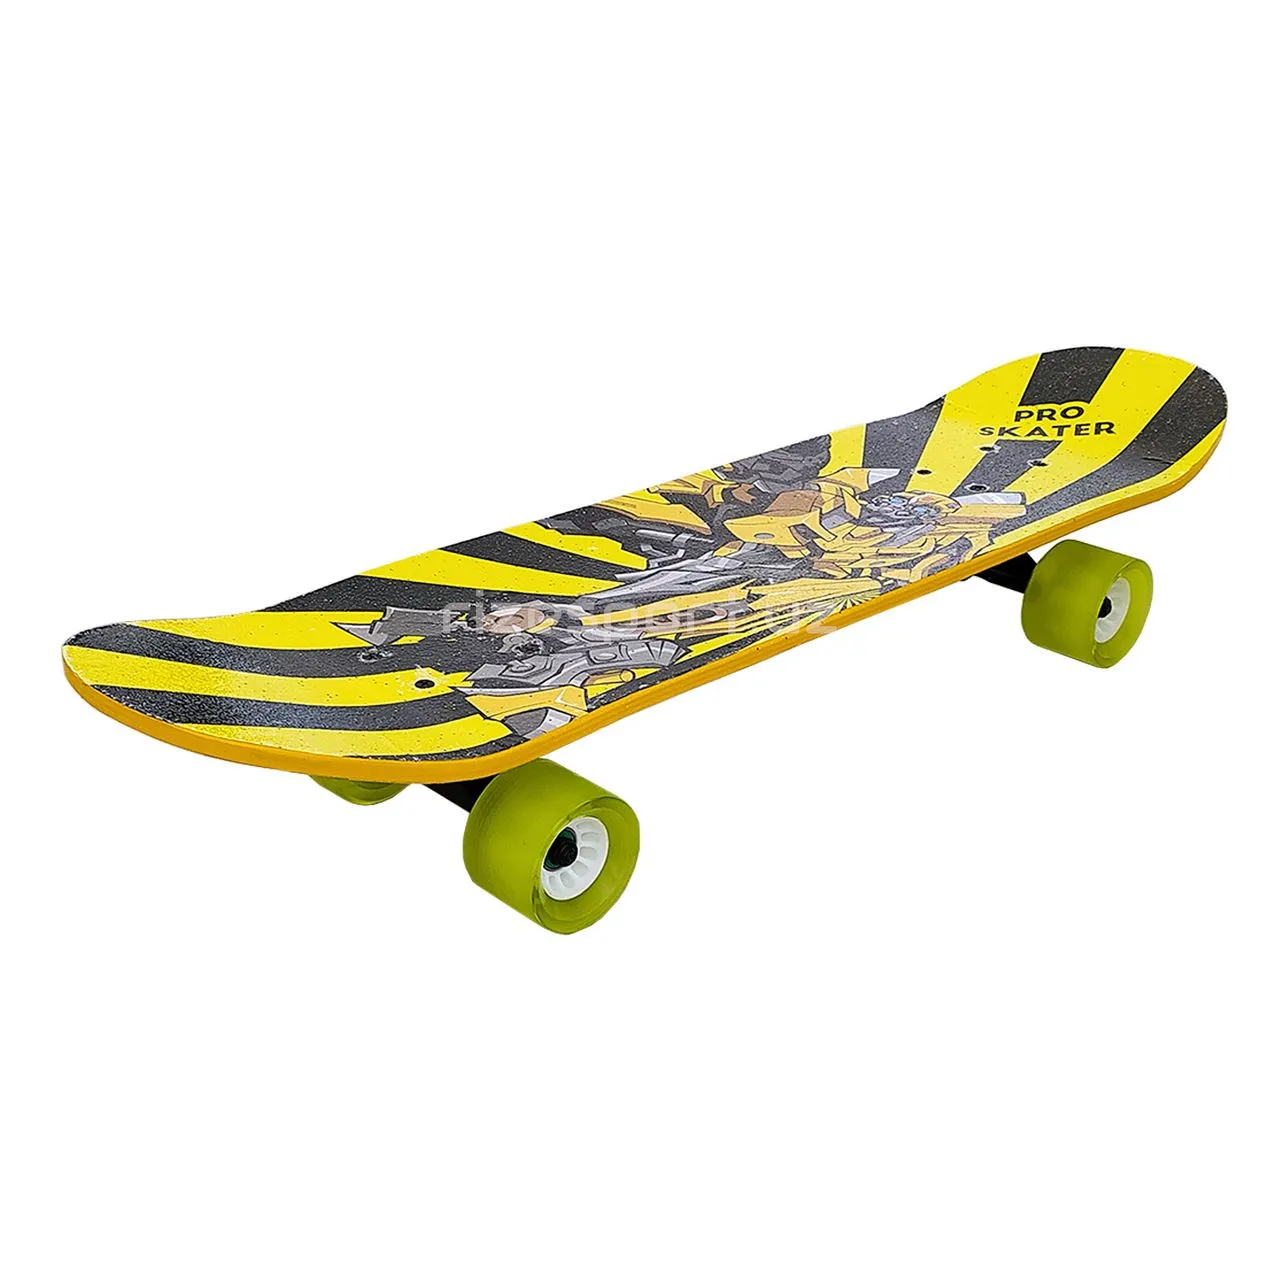 Skateboard Pro Skater Bumblebee 31"#4